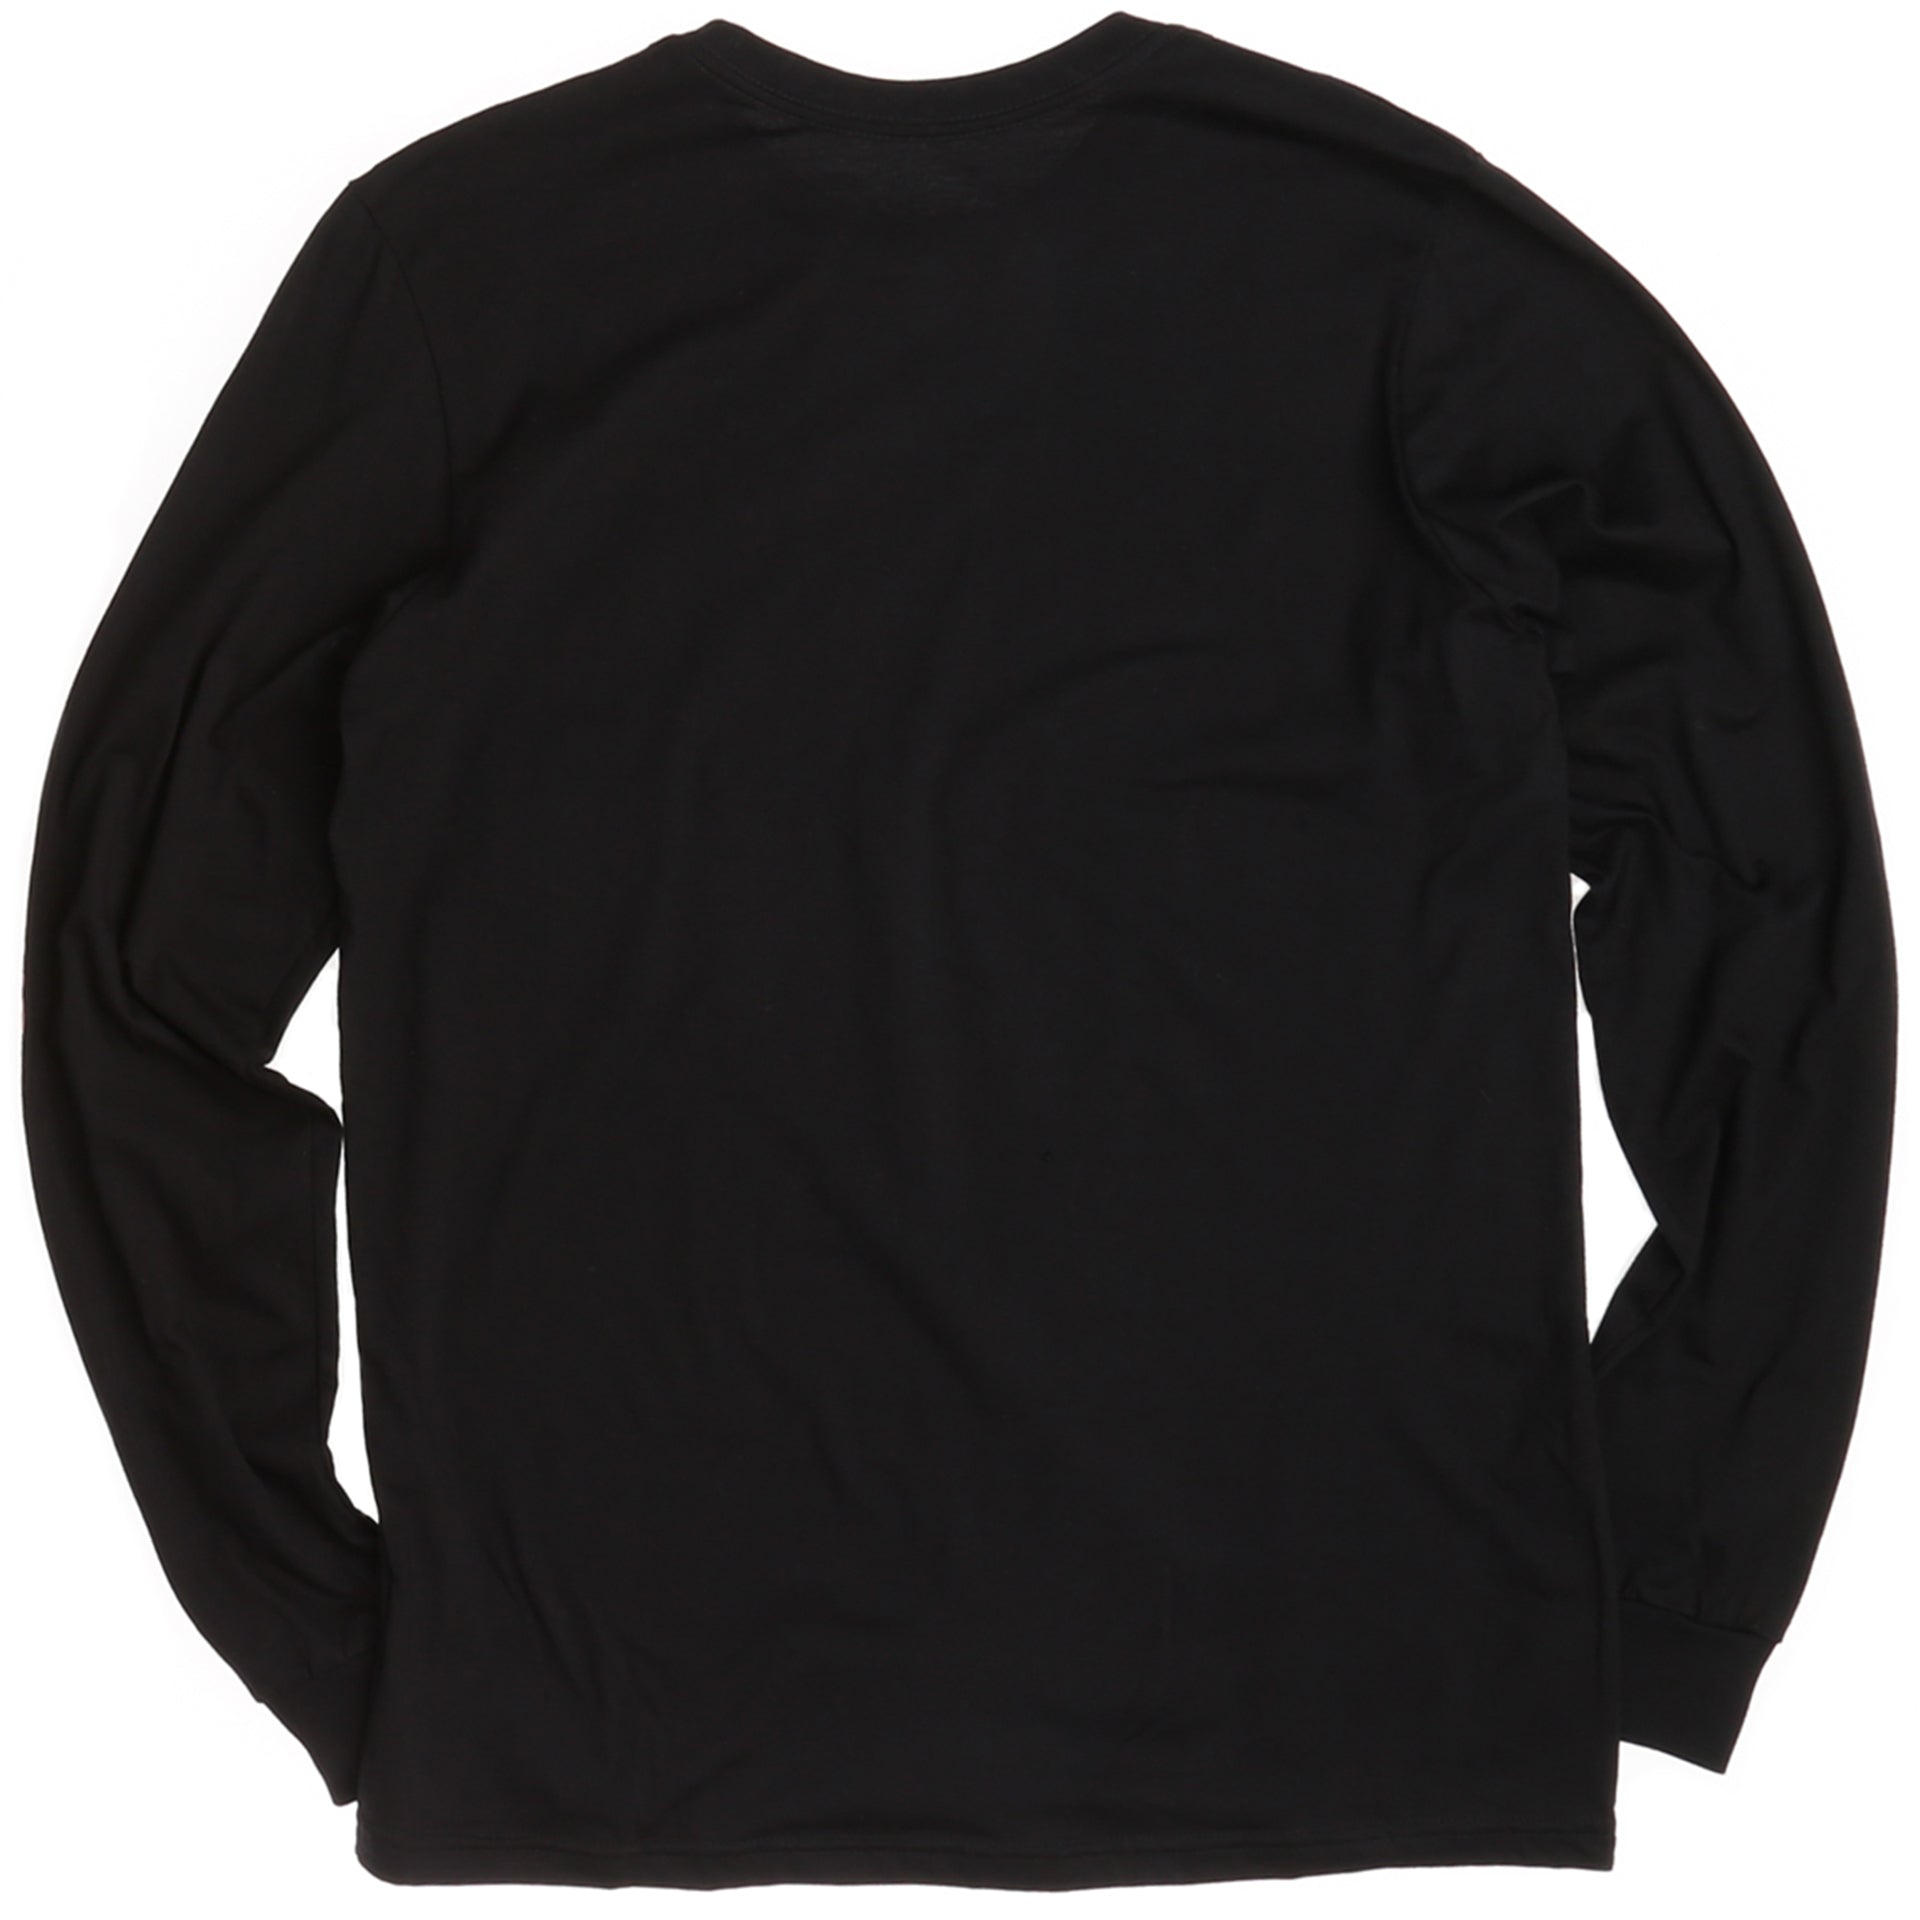 RVCA x Toy Machine Long Sleeve T-Shirt - Black - New Star